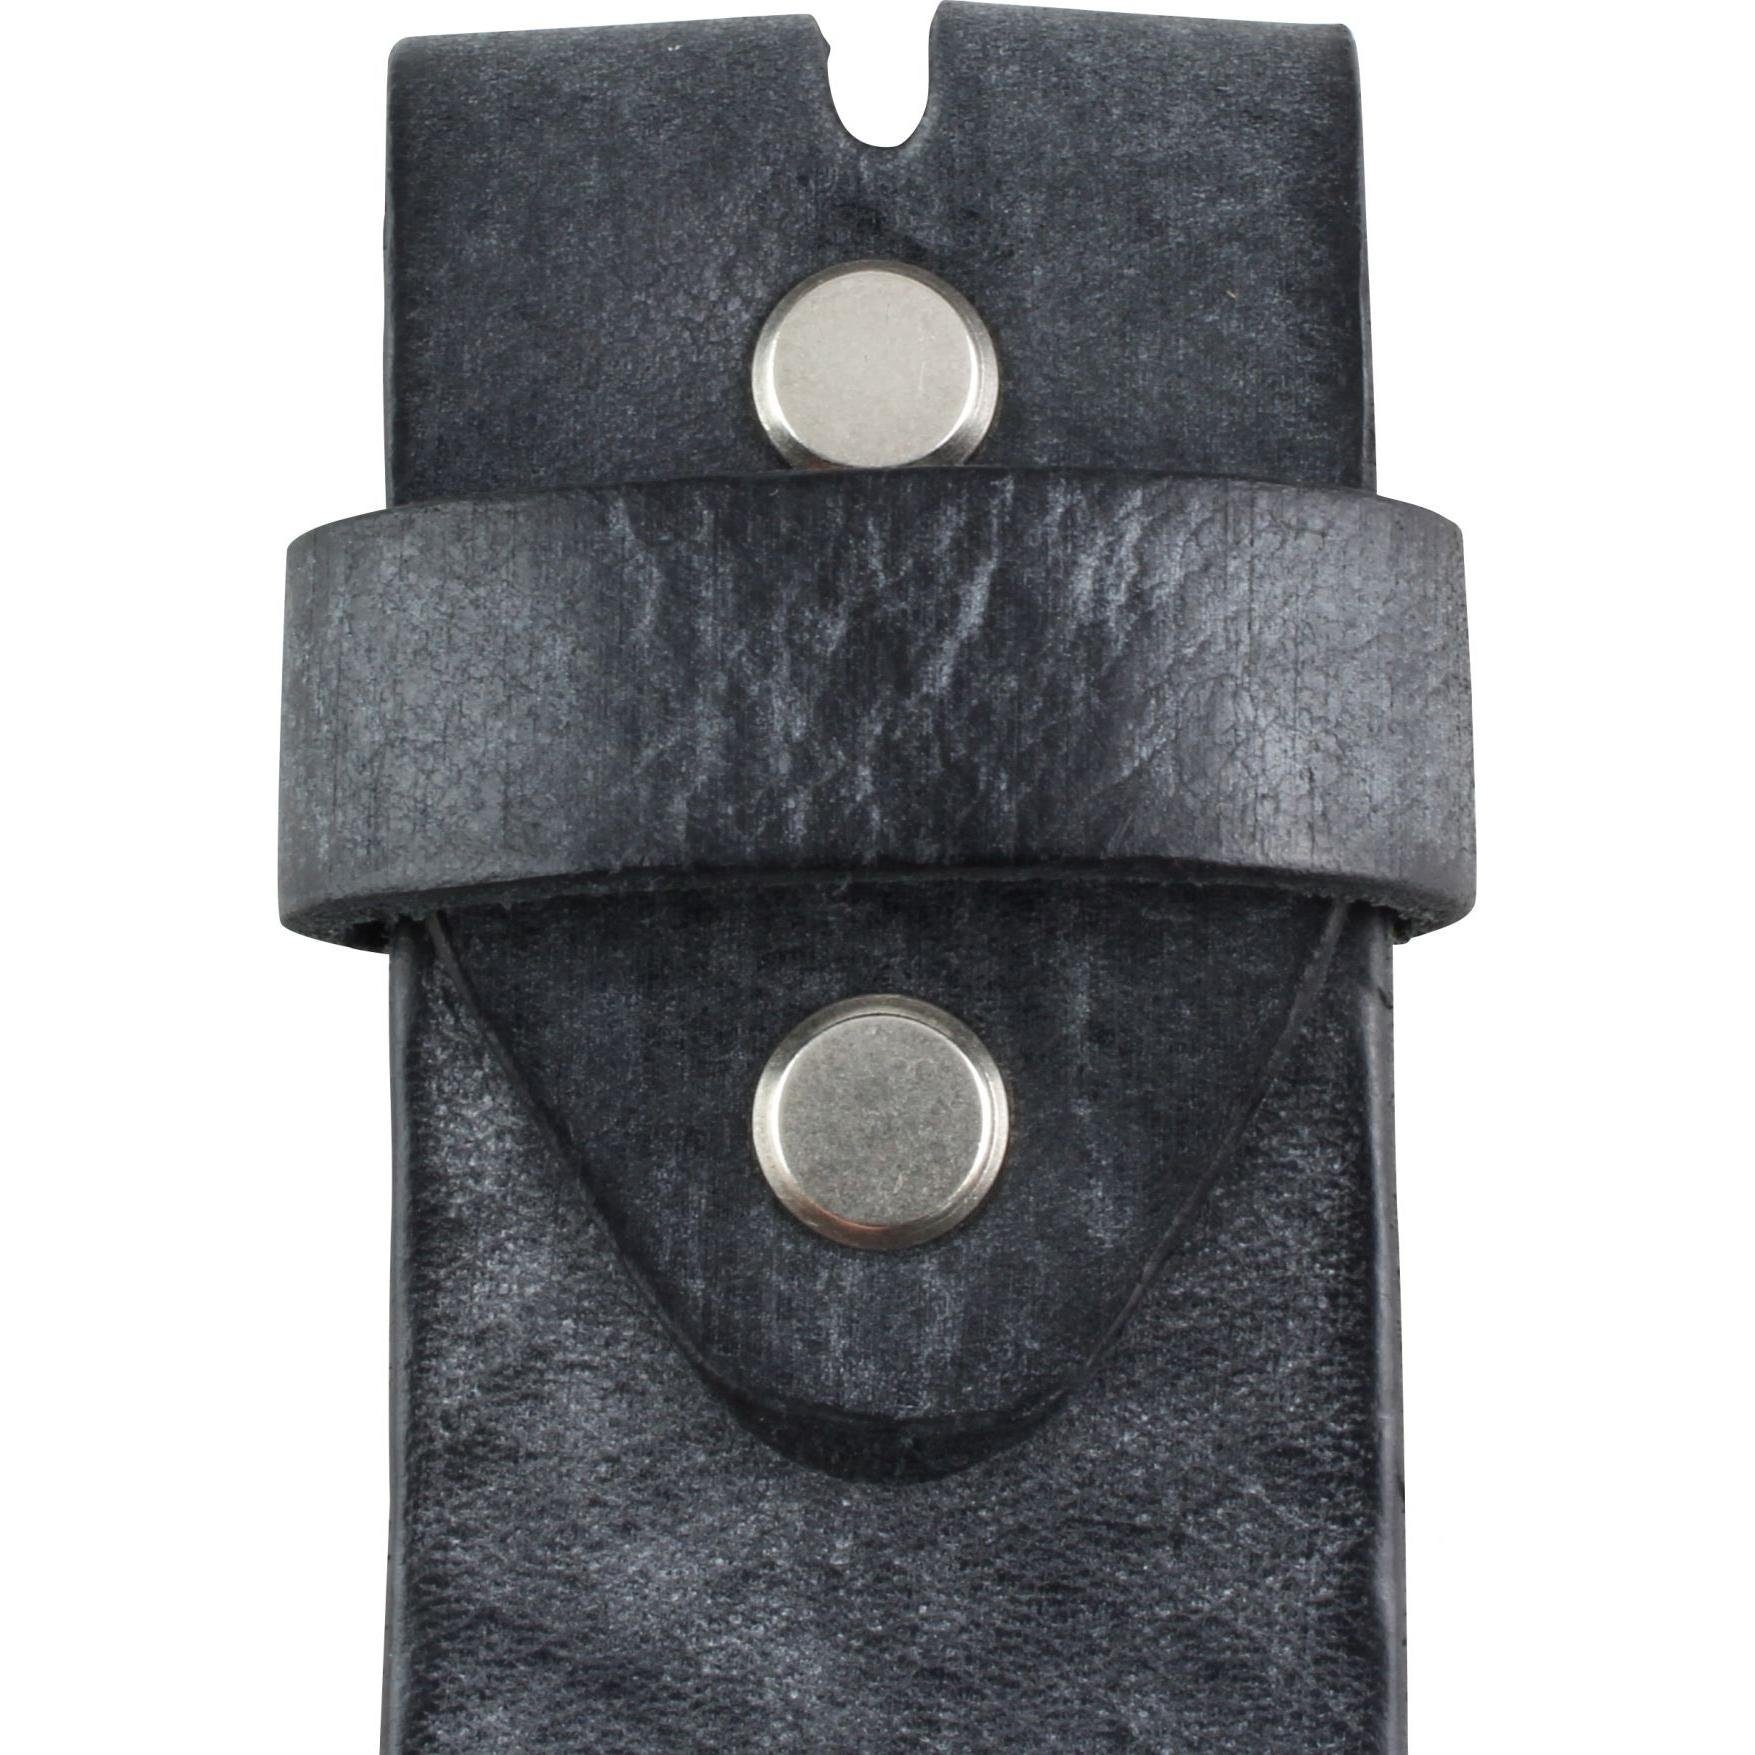 BELTINGER Vollrindleder 4 Used-Look Gürtel Ledergürtel weichem aus Jeans- ohne Khaki cm - Schnalle